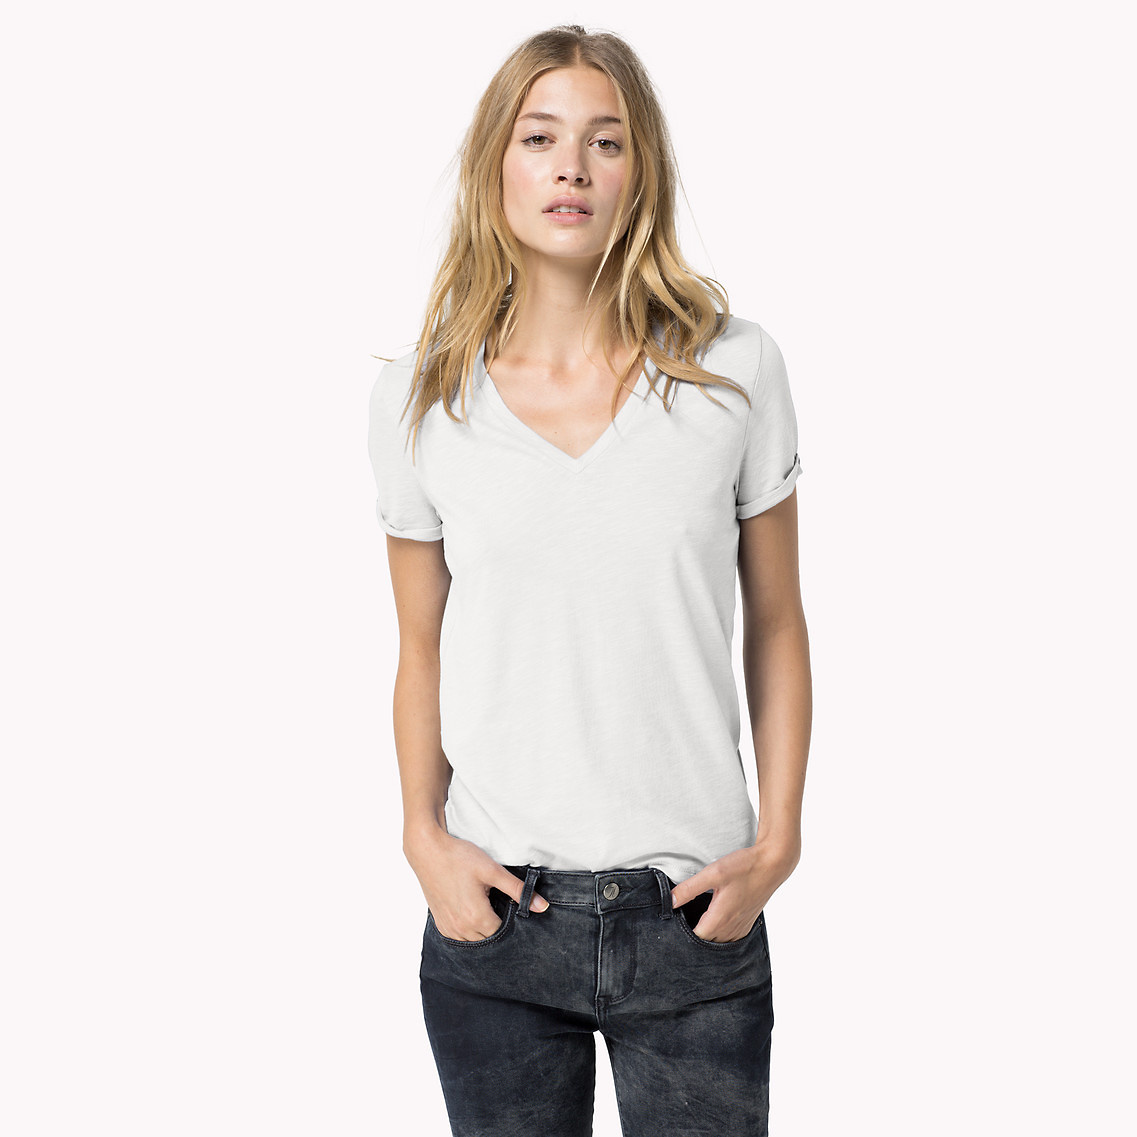 Tommy Hilfiger női fehér pamut T-shirt 2015.03.01 #80615 fotója